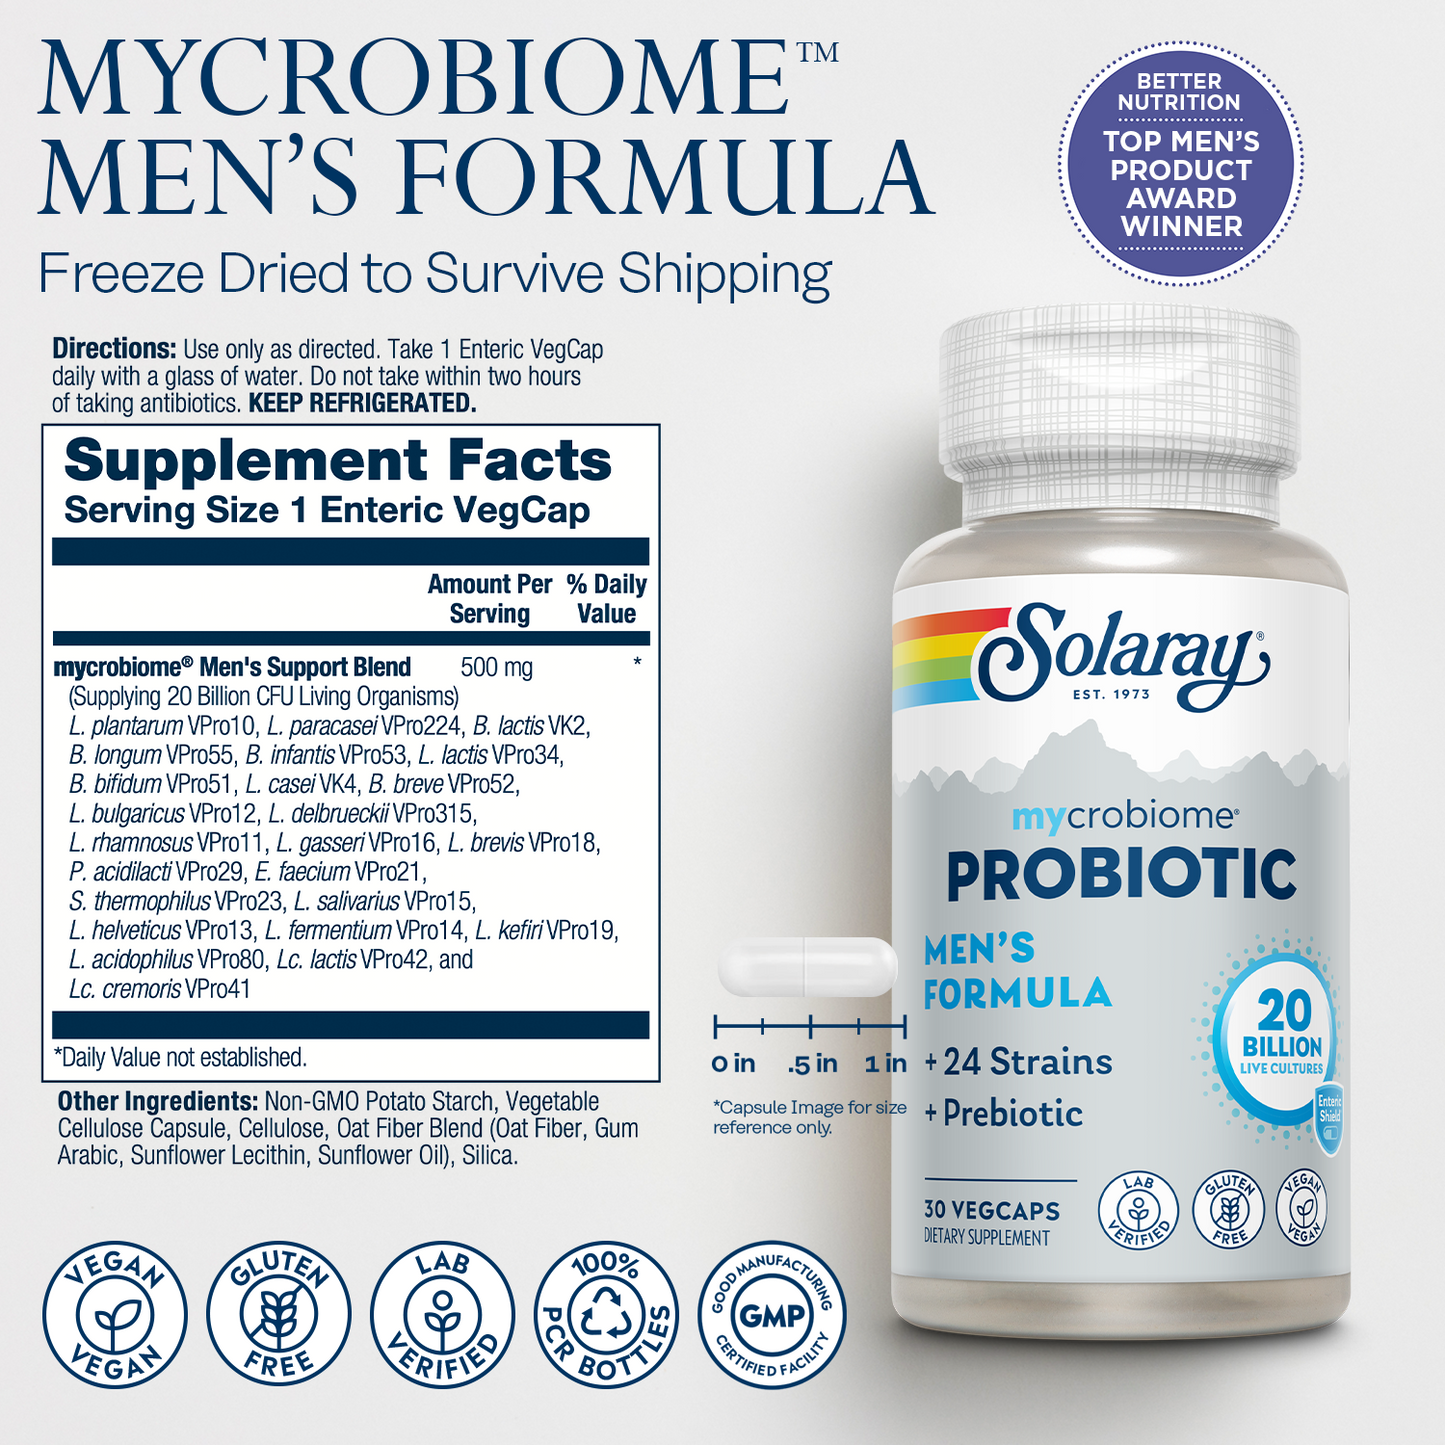 Solaray Mycrobiome Probiotic Men’s Formula, Probiotics for Men, Gut Health, Digestion, Immune Function & More, 20 Billion CFU Mens Probiotic, 24 Strains Plus Prebiotic, 30 Servings, 30 VegCaps